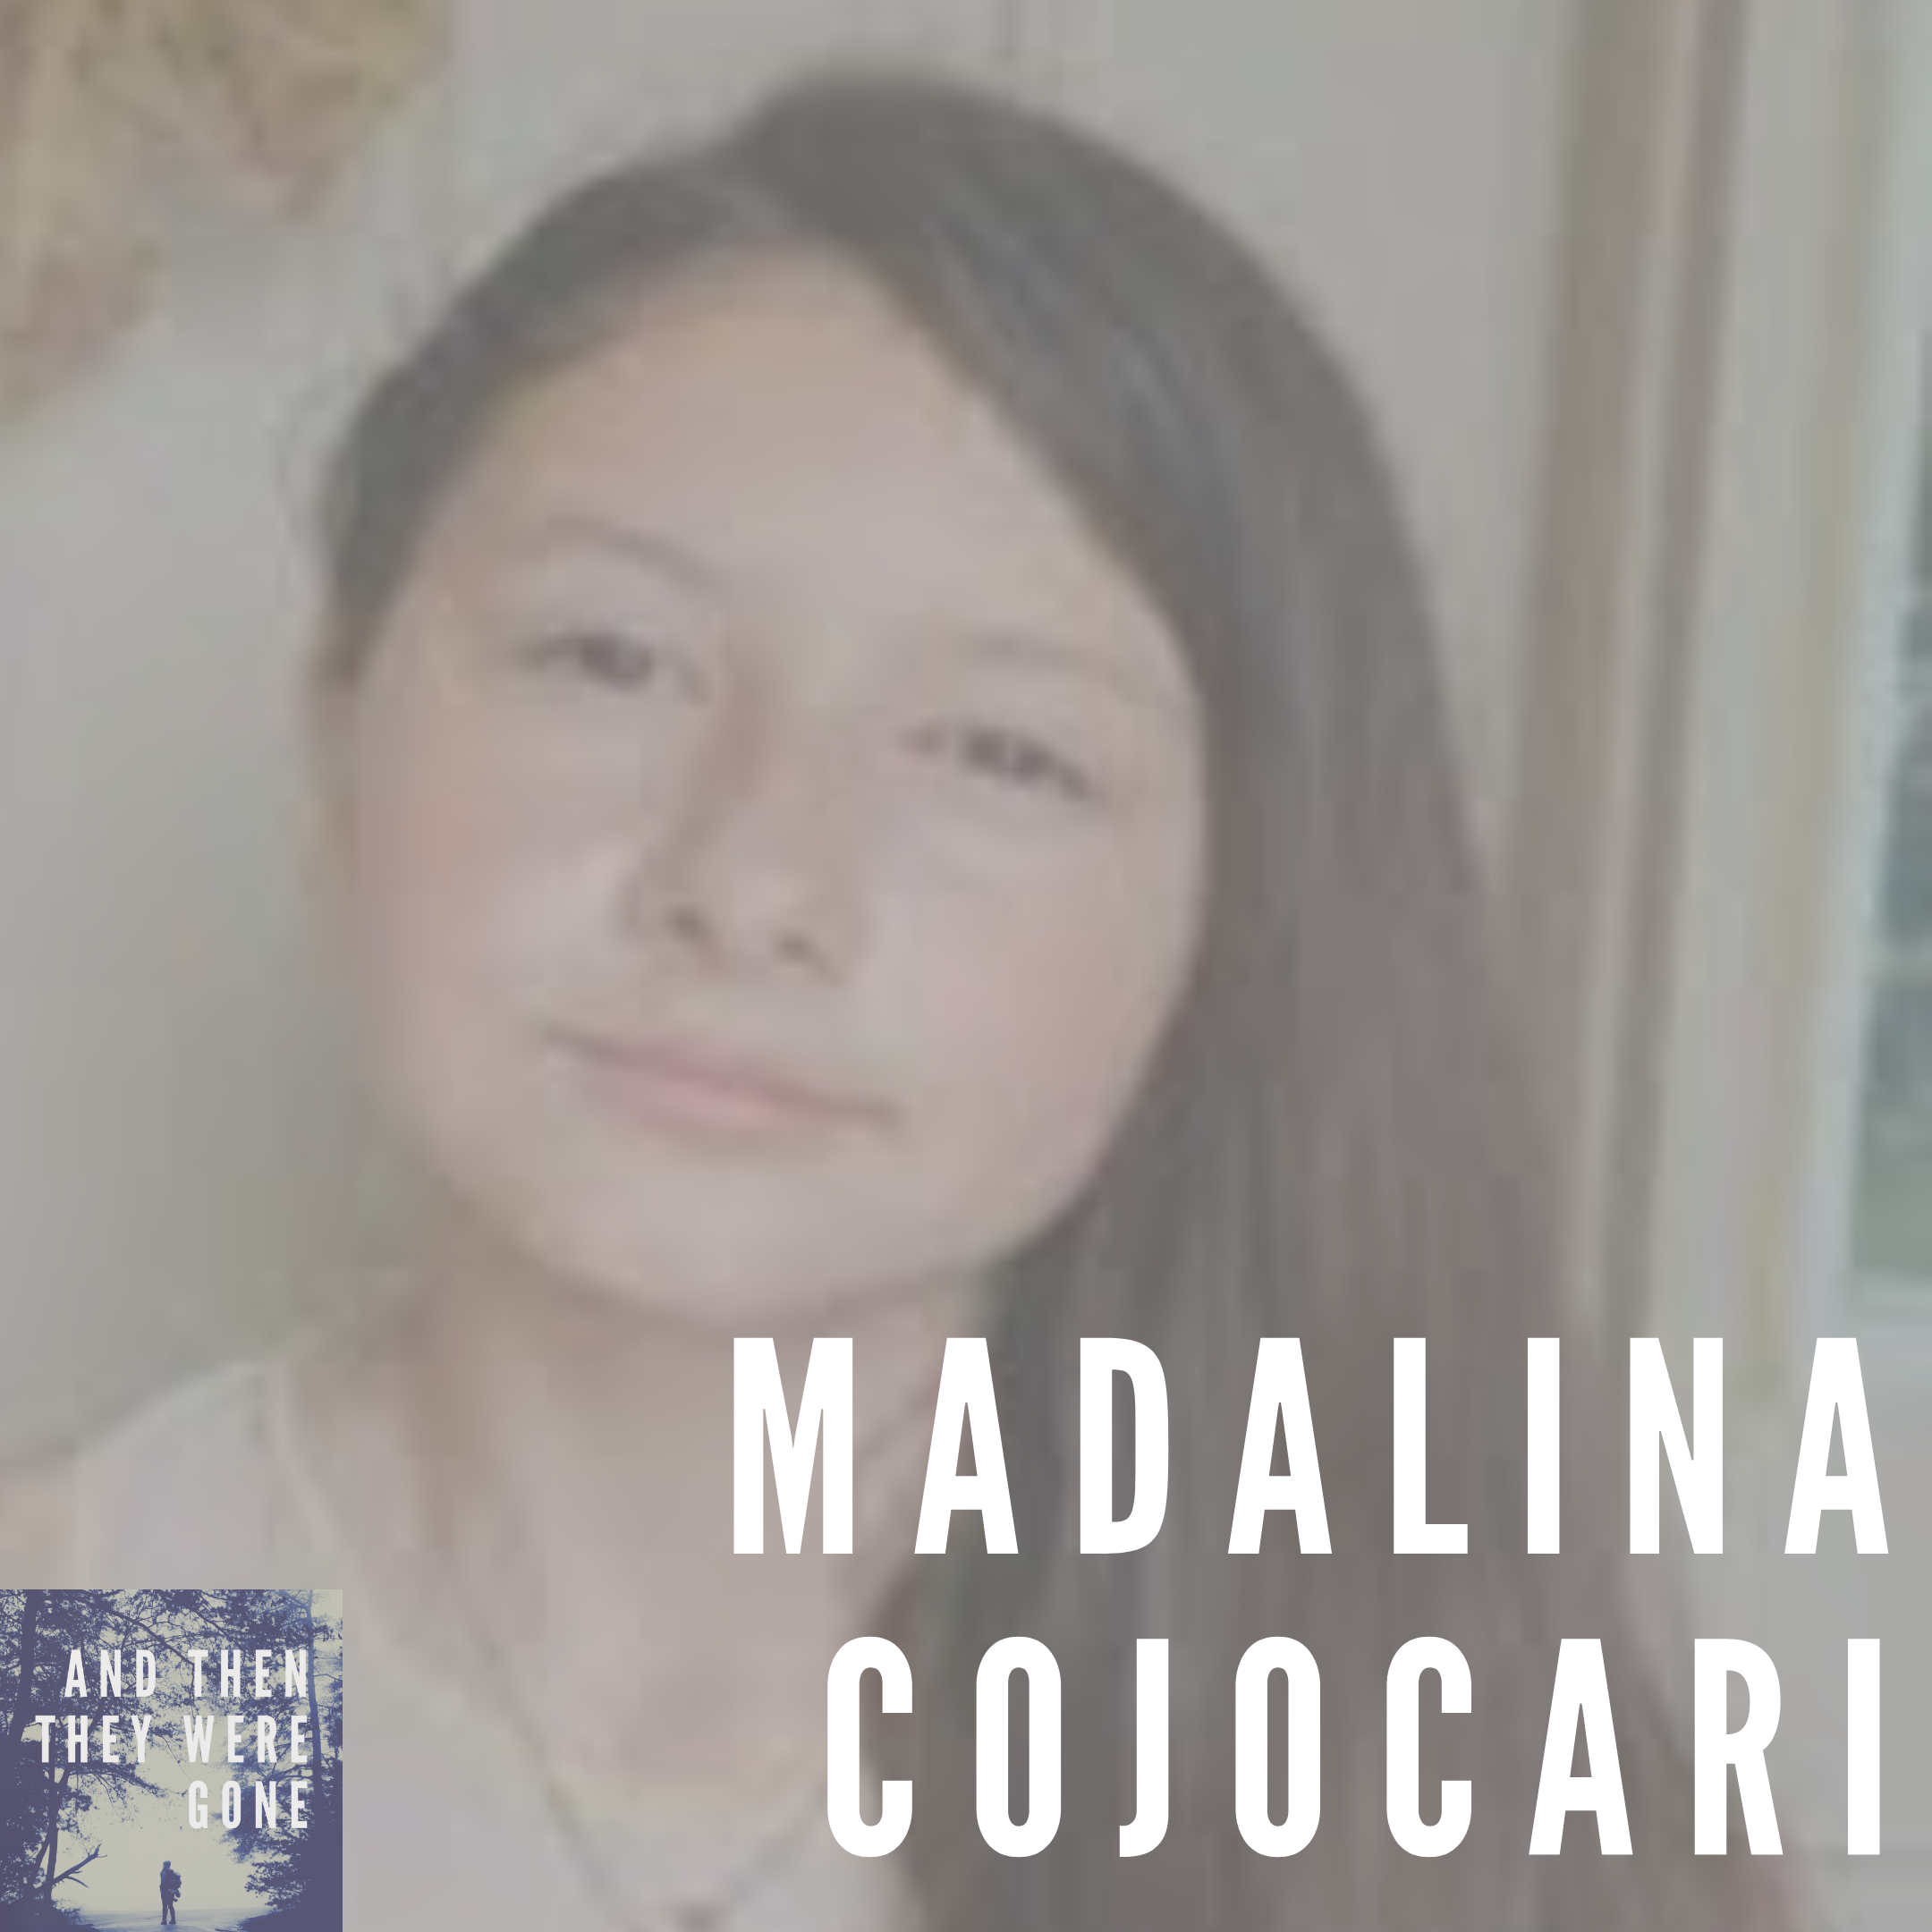 Madalina Cojocari has been missing from Cornelius, NC since November 23, 2022